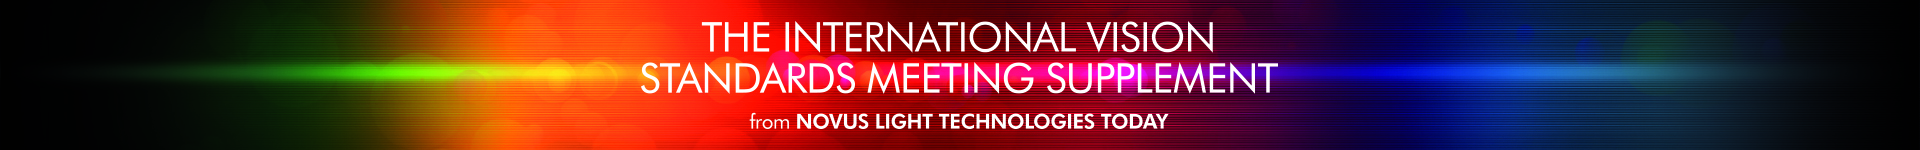 International Vision Standards Meeting Supplement 2015